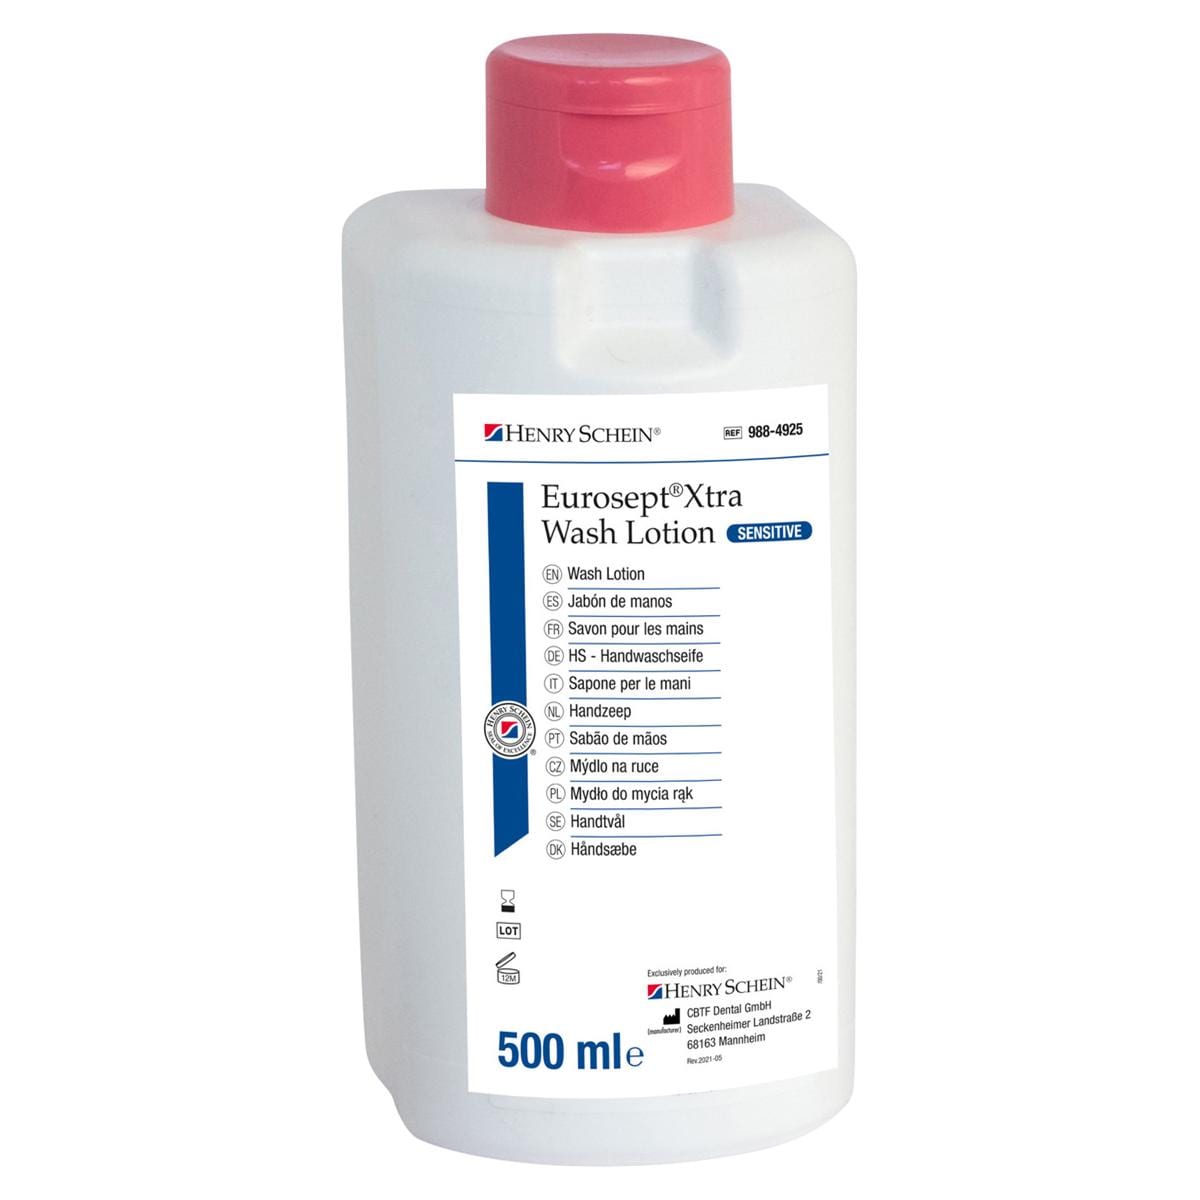 HS-Waschlotion Sensitiv Eurosept® Xtra, Washlotion Sensitive - Flasche 500 ml